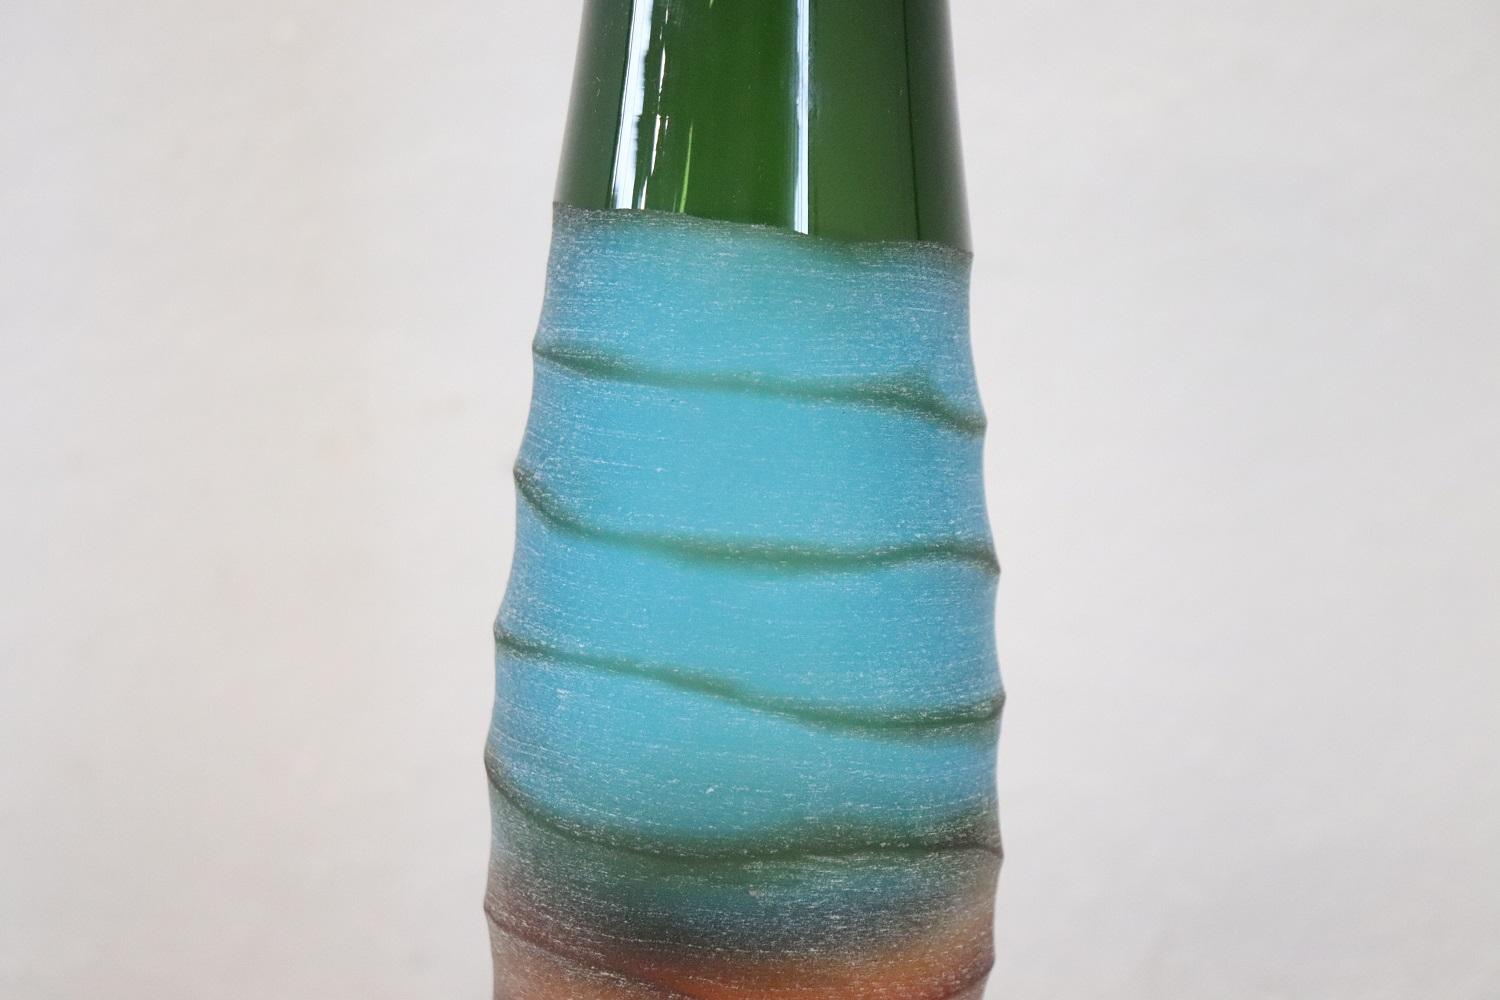 Mehrfarbige Vintage-Kunstglasvase aus Kunstglas von Villeroy & Boch, 1990er Jahre (Ende des 20. Jahrhunderts) im Angebot